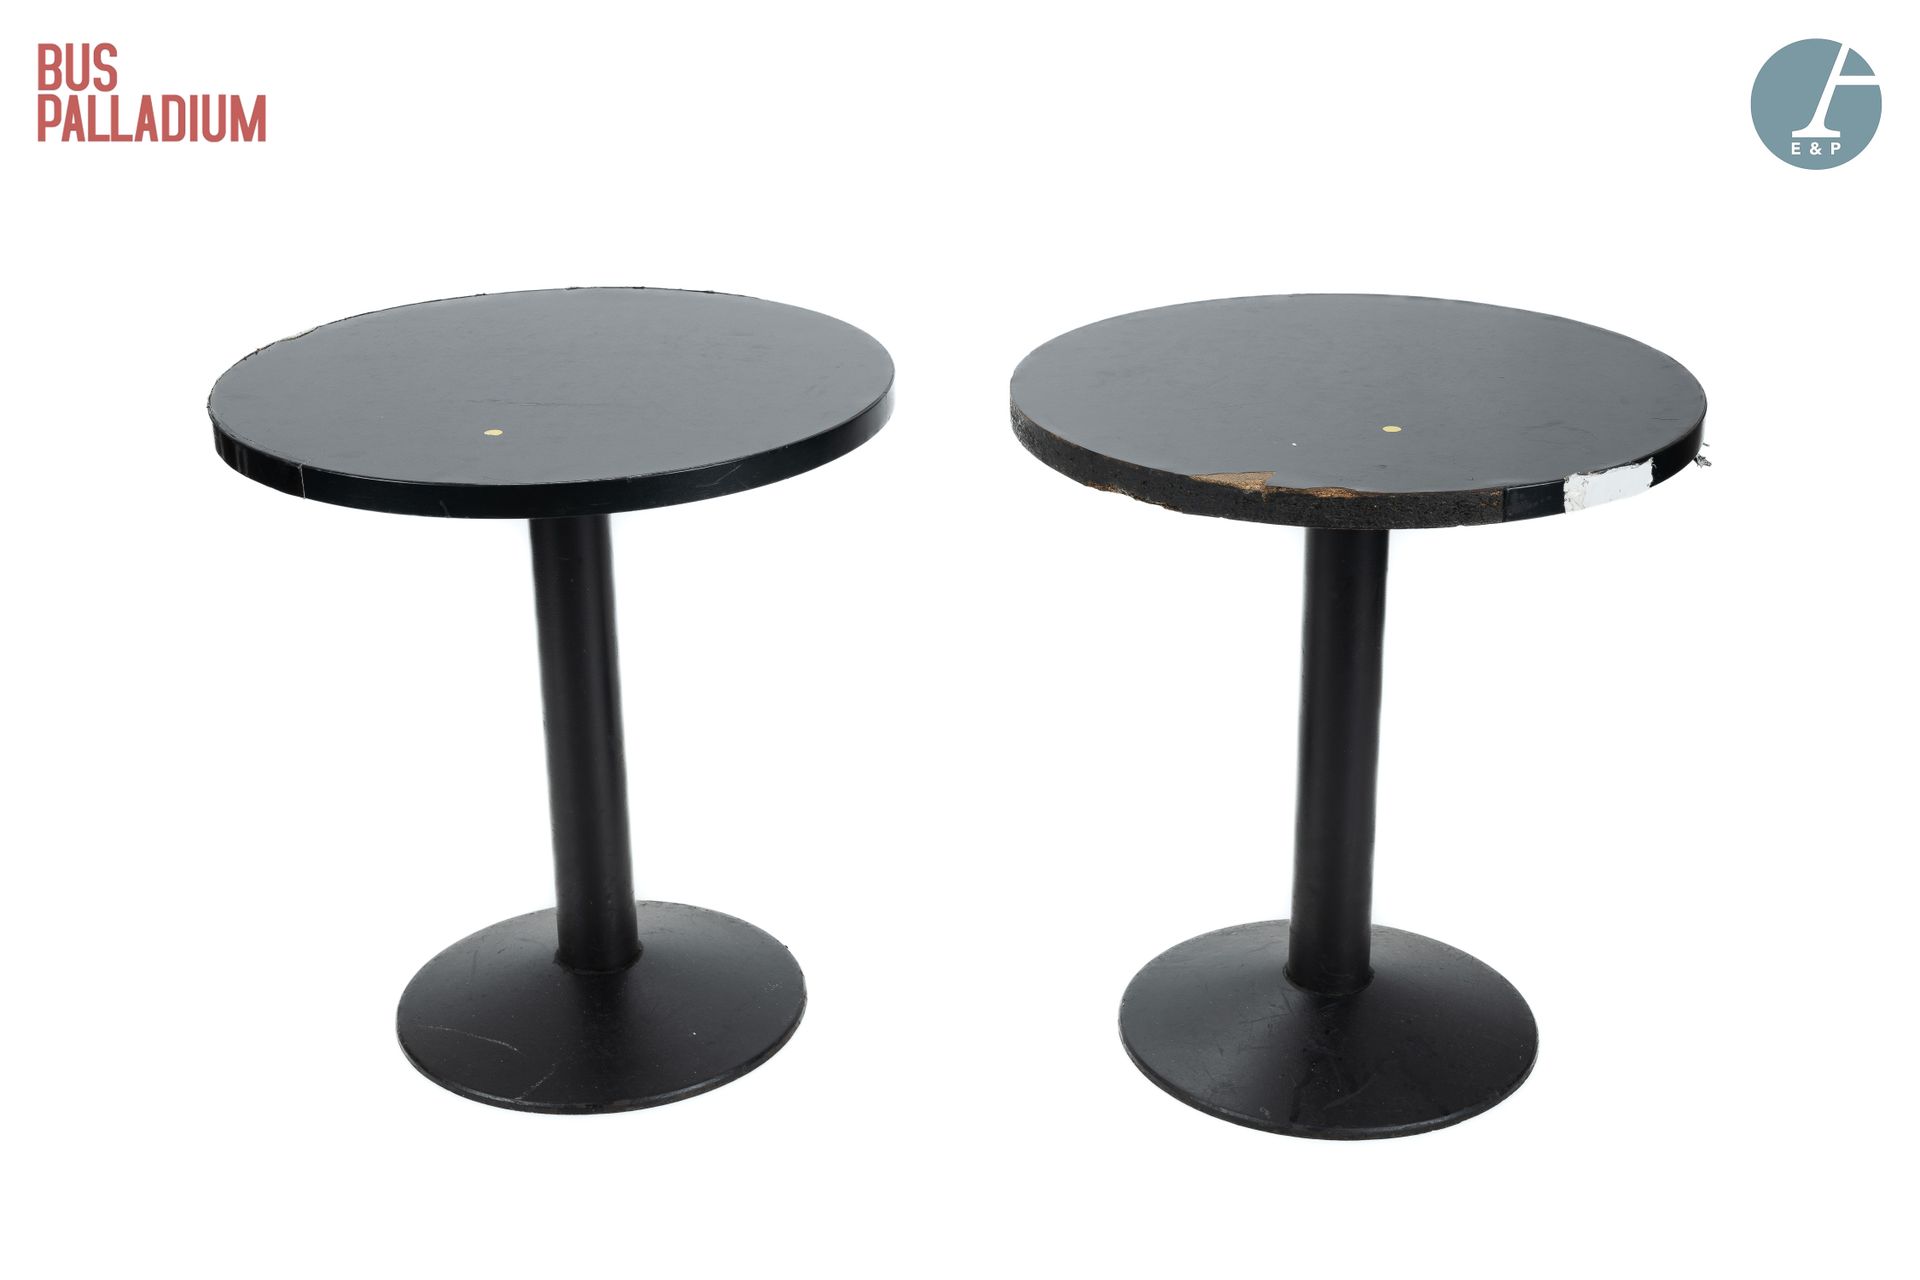 Null 从Palladium巴士出发

两张圆桌，黑色胶合板桌面，铸铁底座 

高：65厘米 - 直径：59.5厘米

粘合剂的痕迹，顶部有缺口，两张桌子上的&hellip;